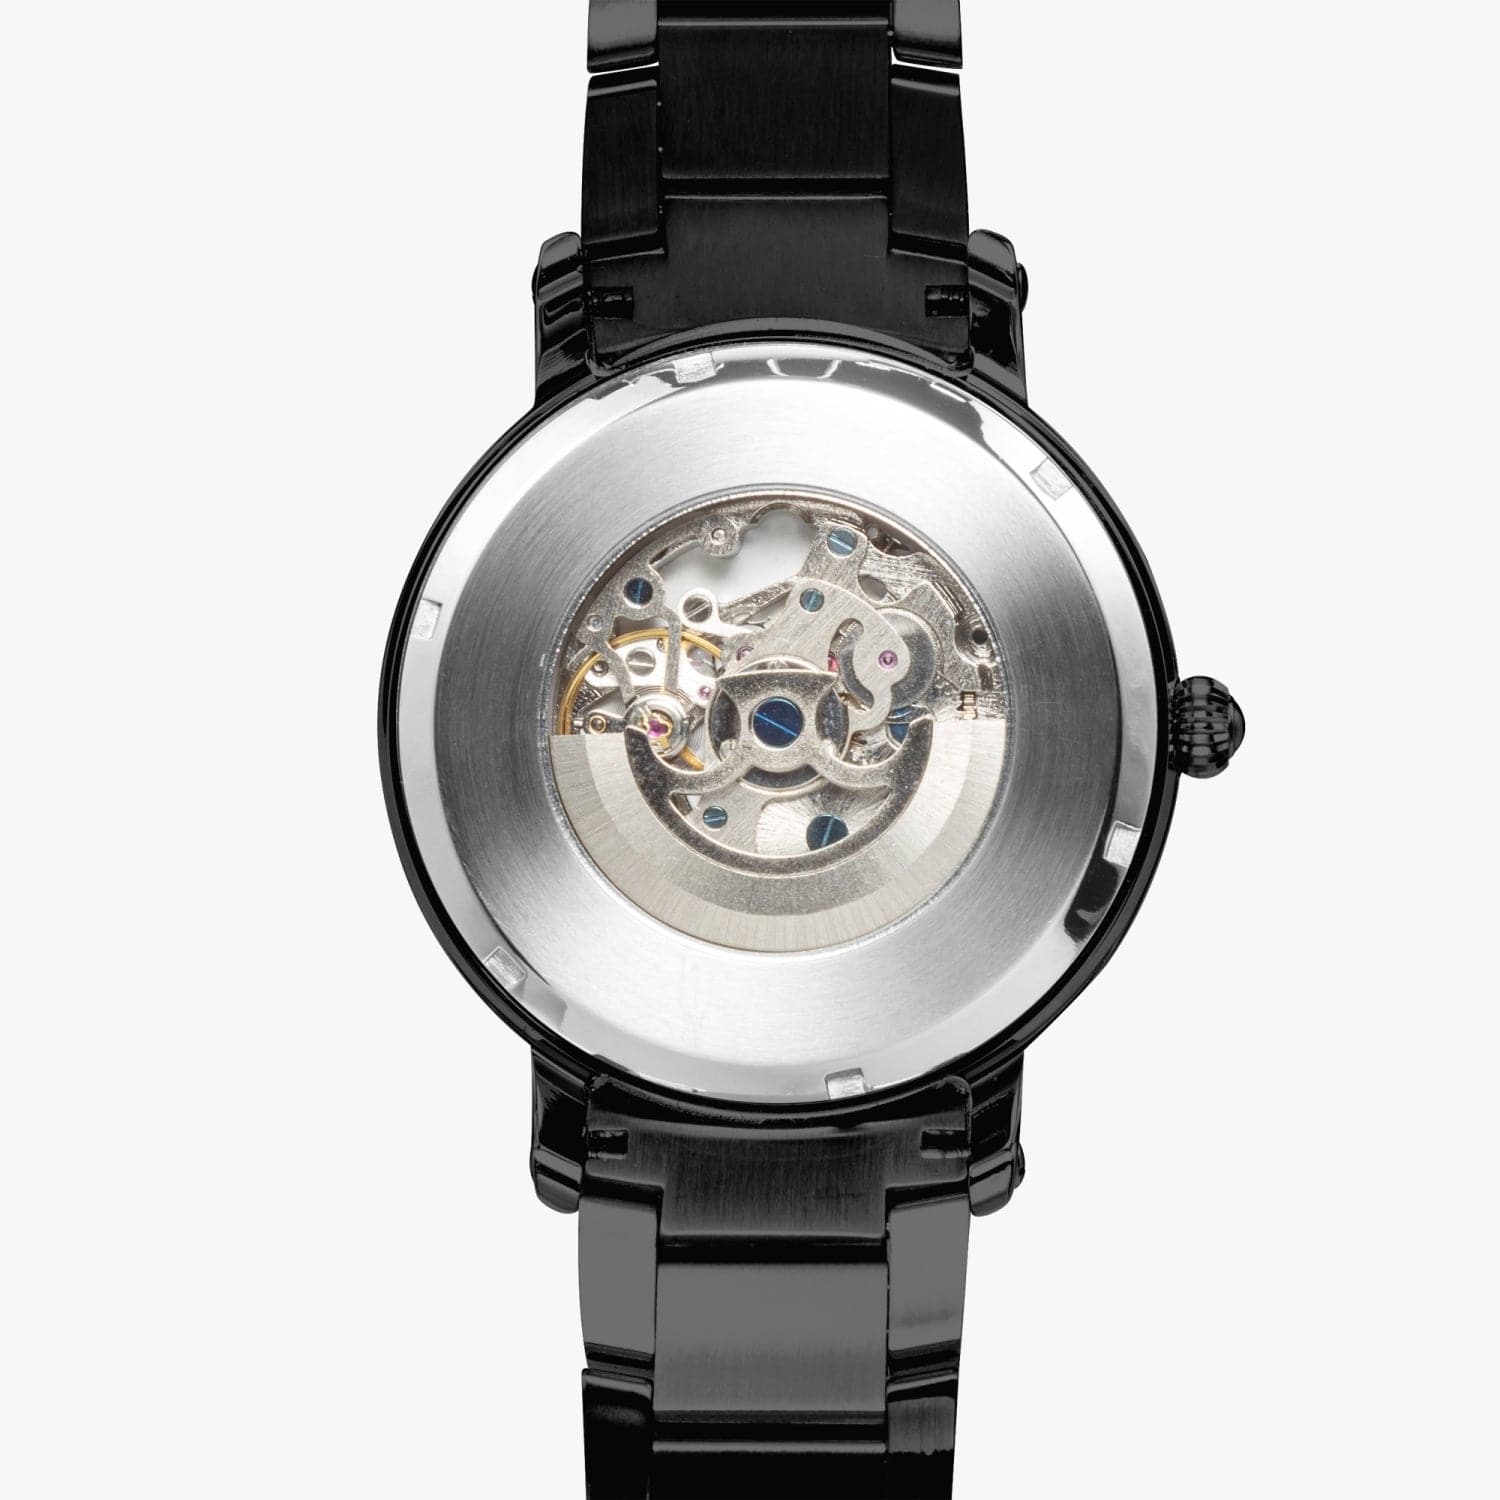 'Sofi's Lazy Sunday' Steel Strap Automatic Watch, by Sensus Studio